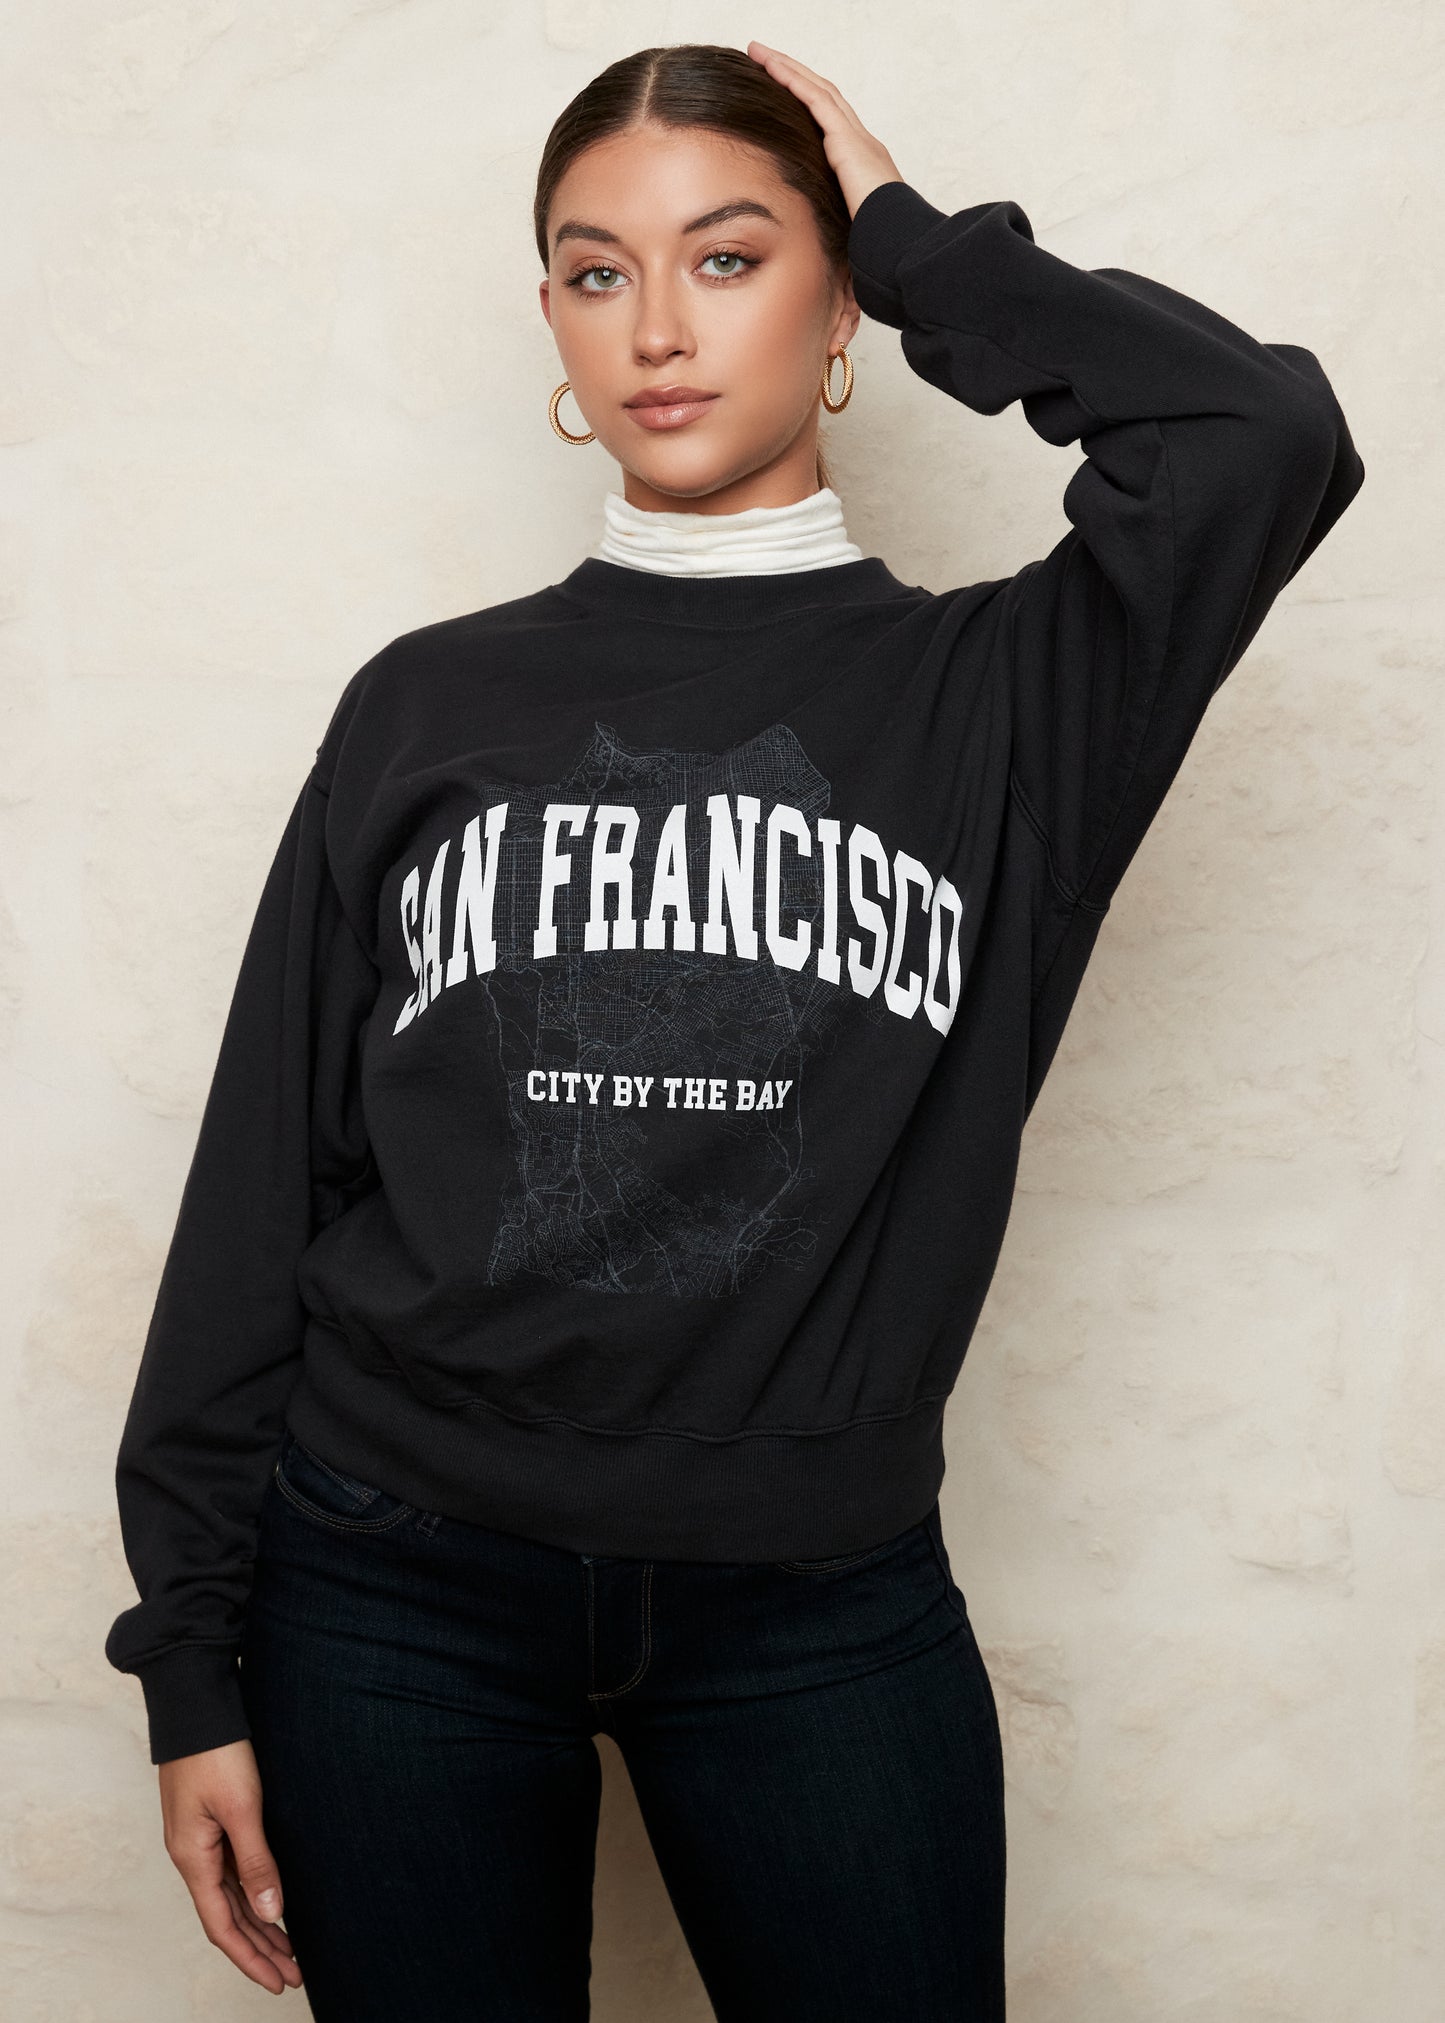 San Francisco Sweater